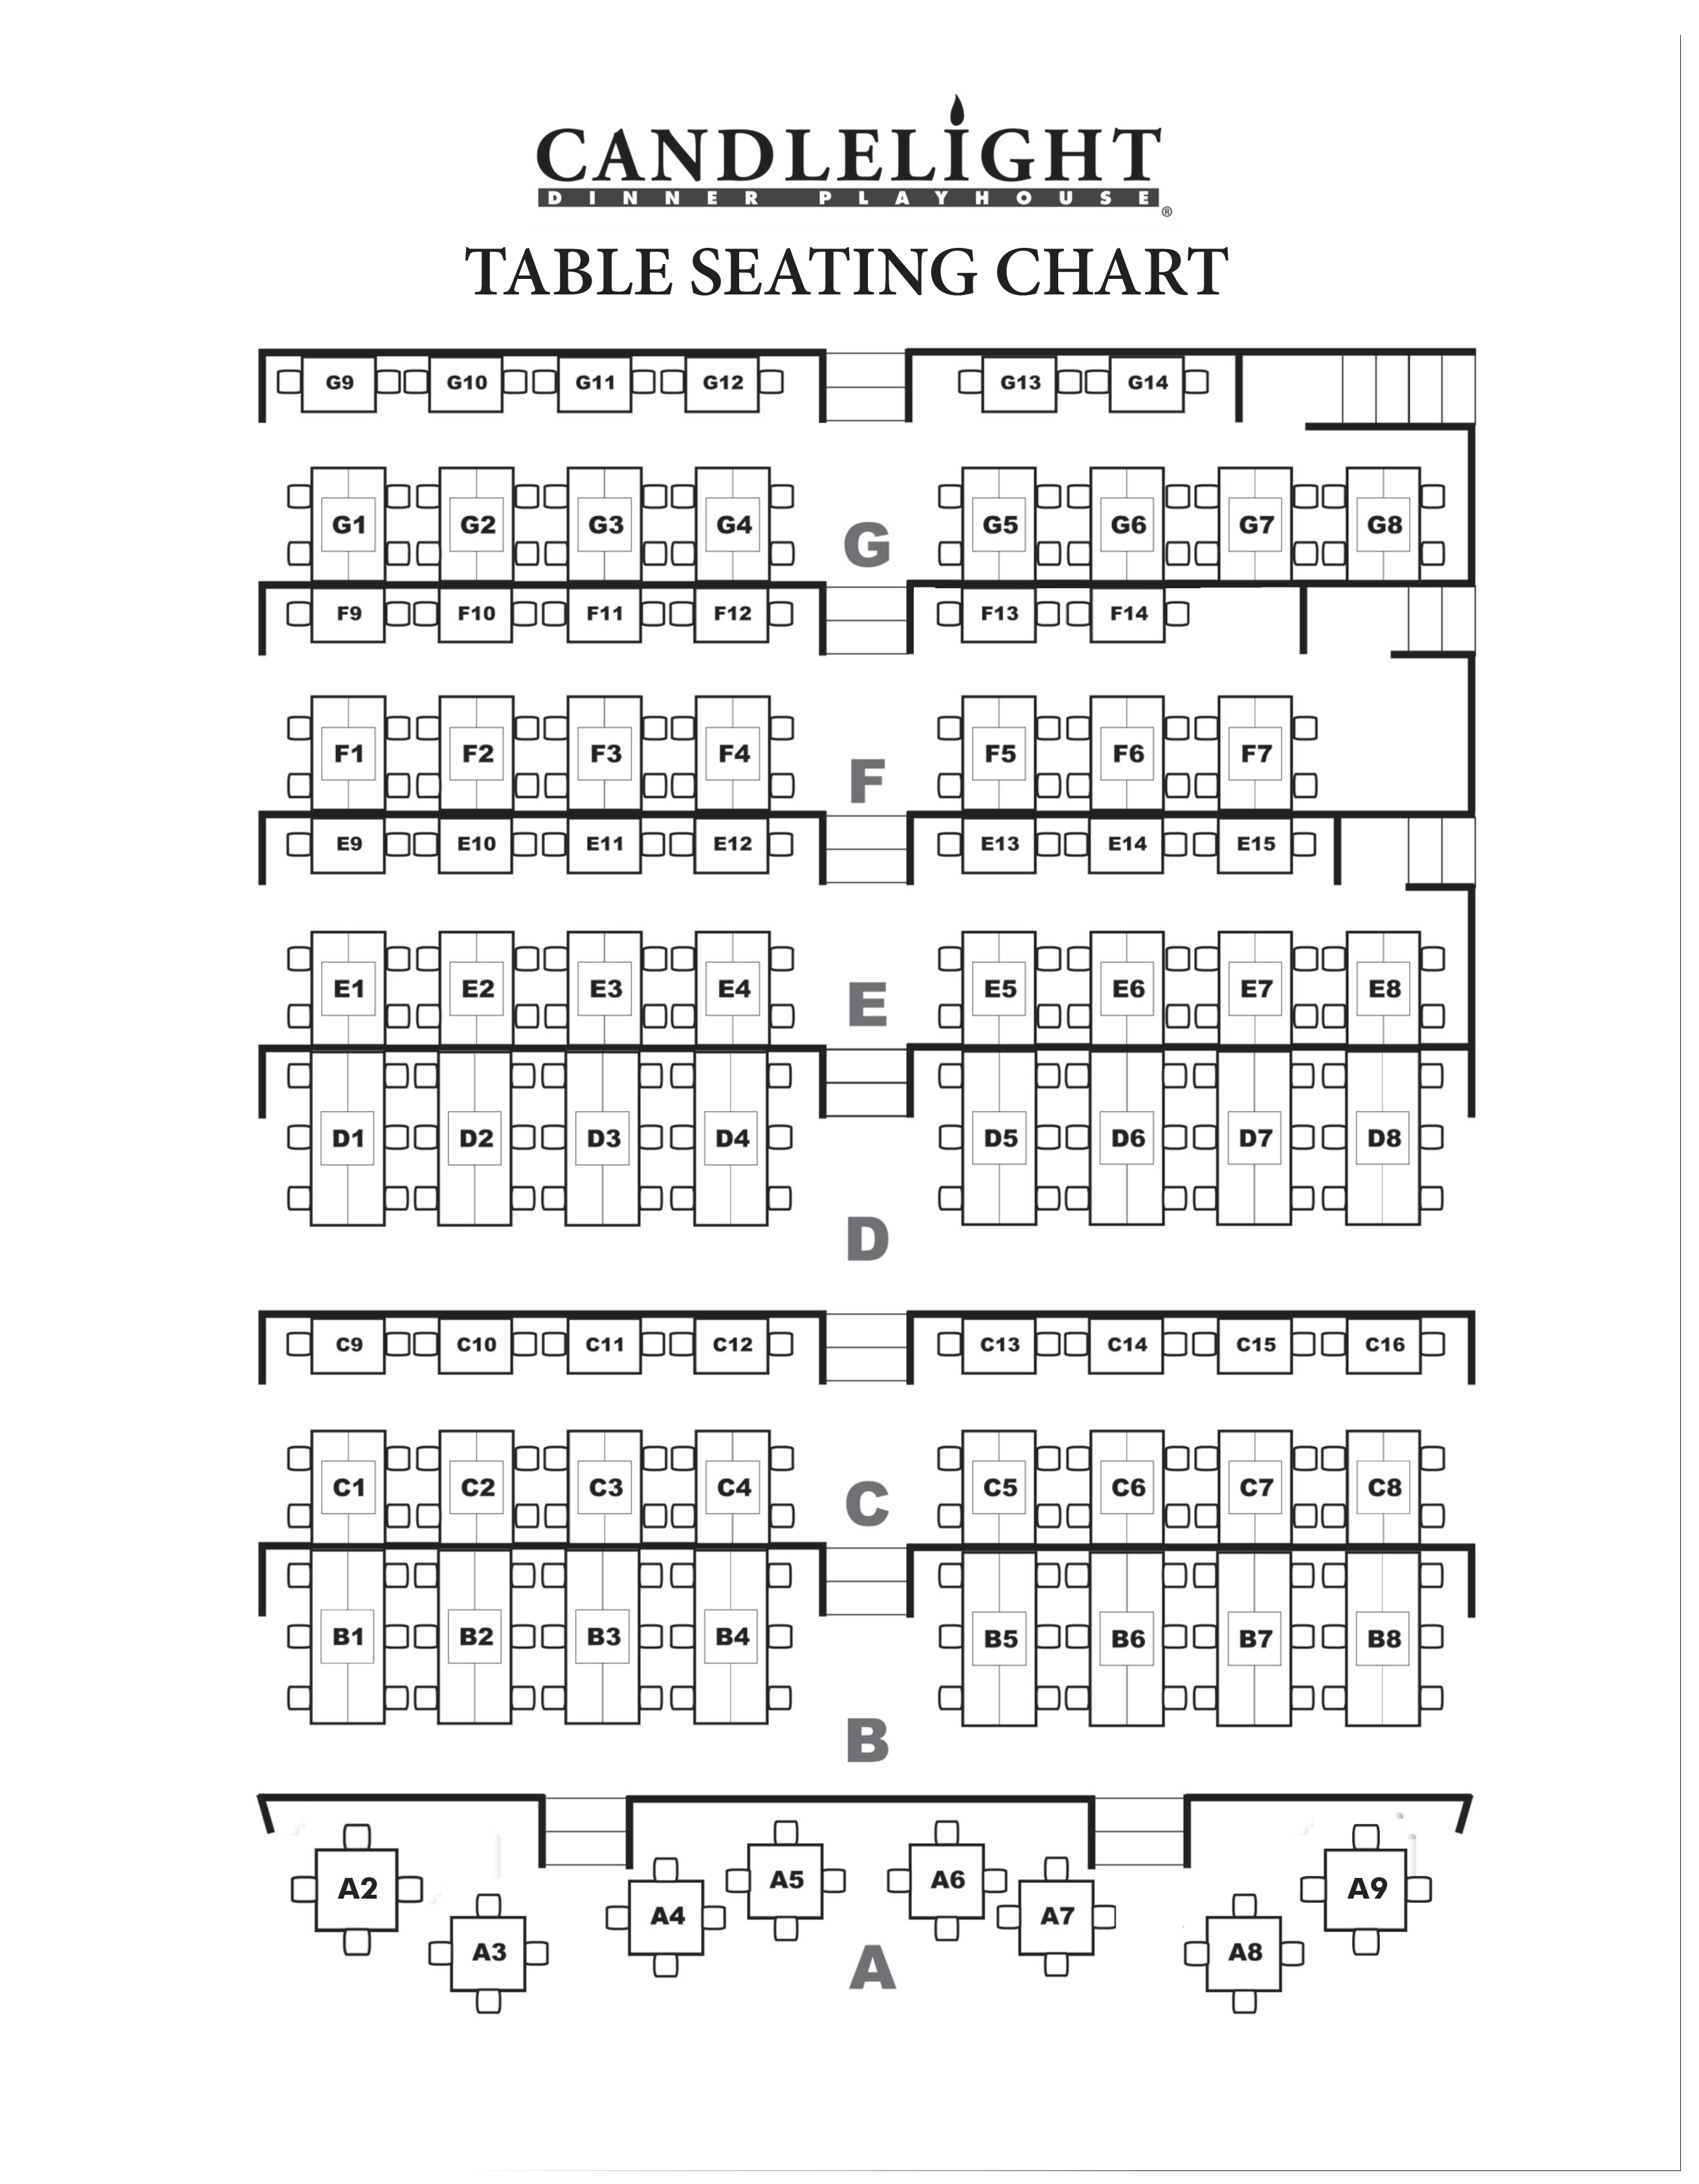 Table Seating Chart main image